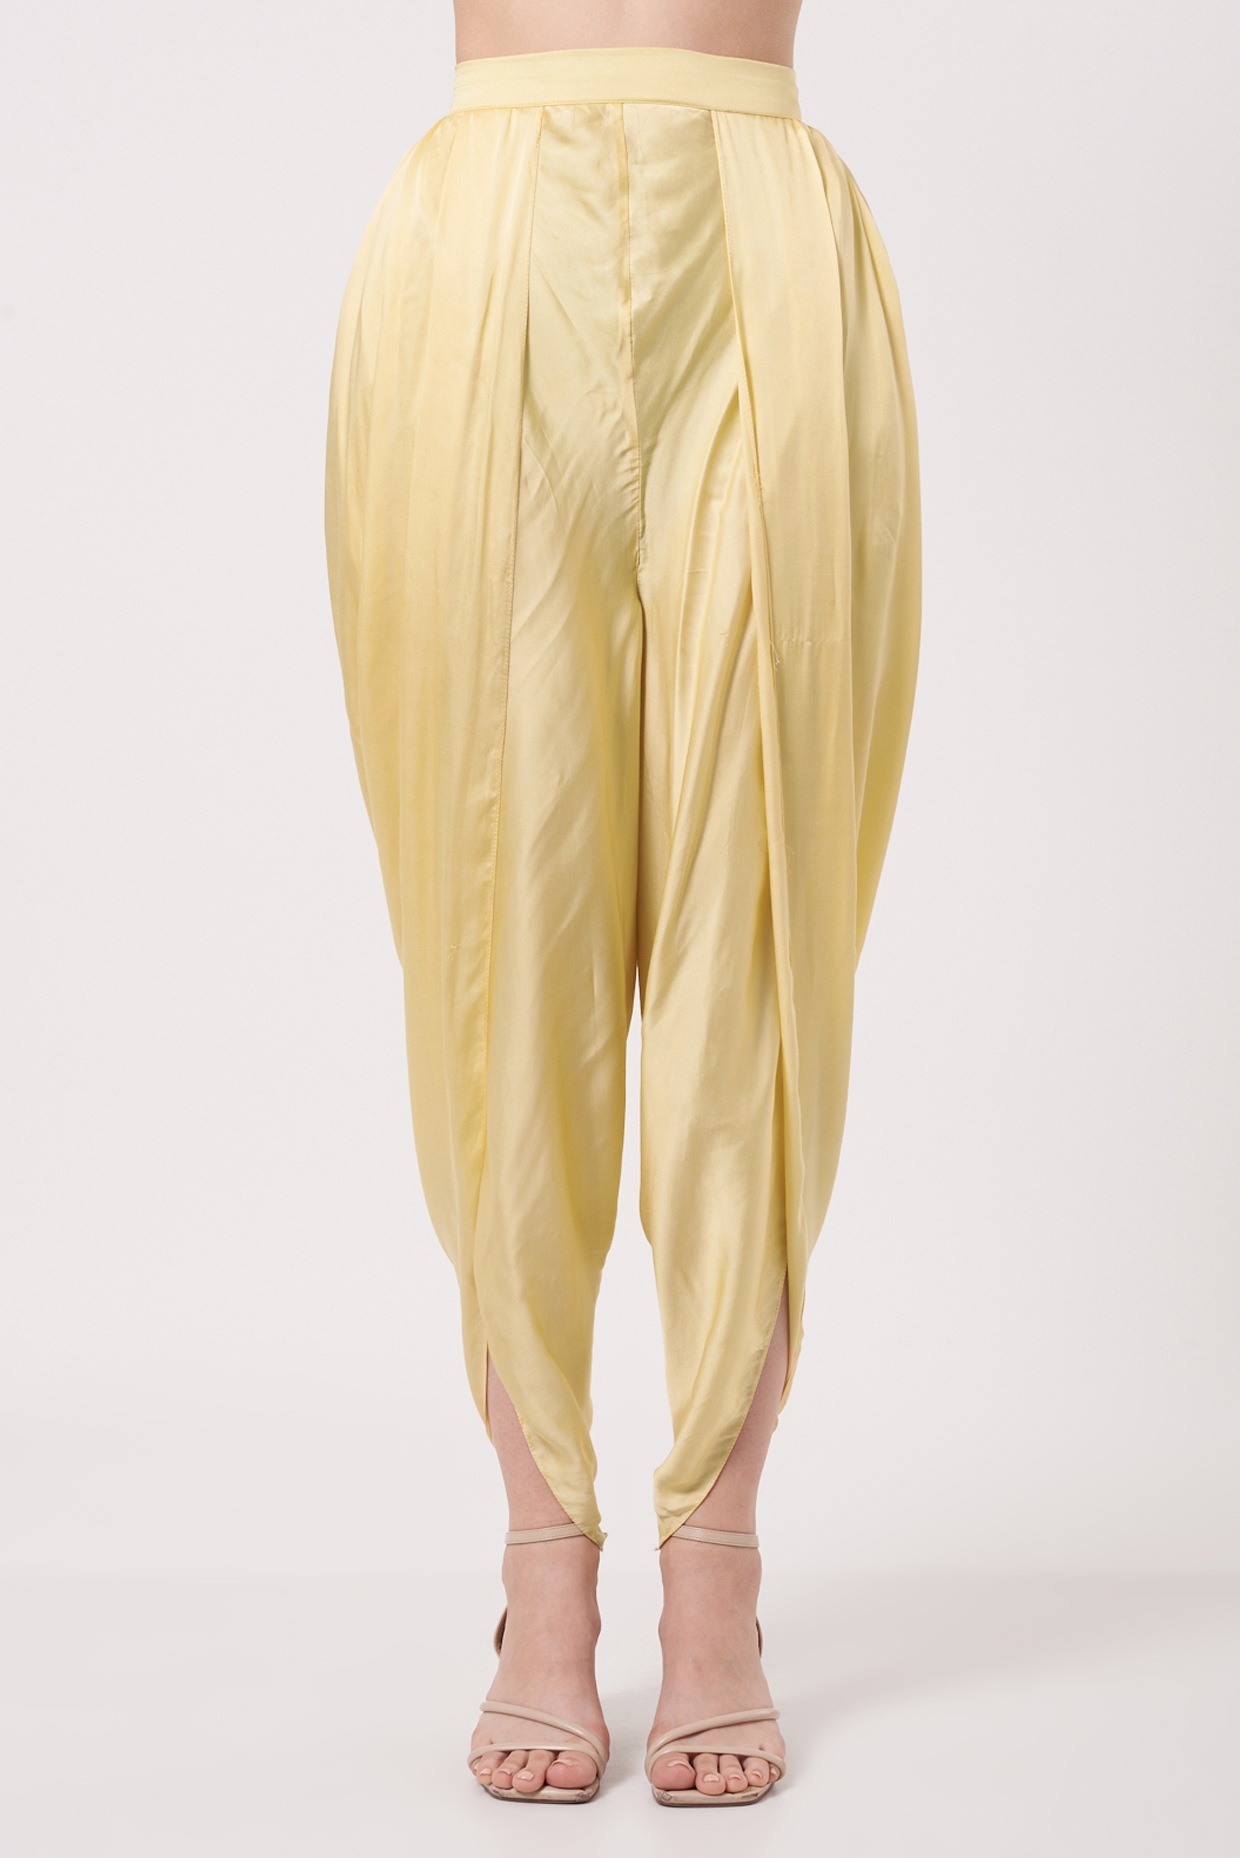 Yellow Linen Block Printed Harem Pants - Jozee Boutique